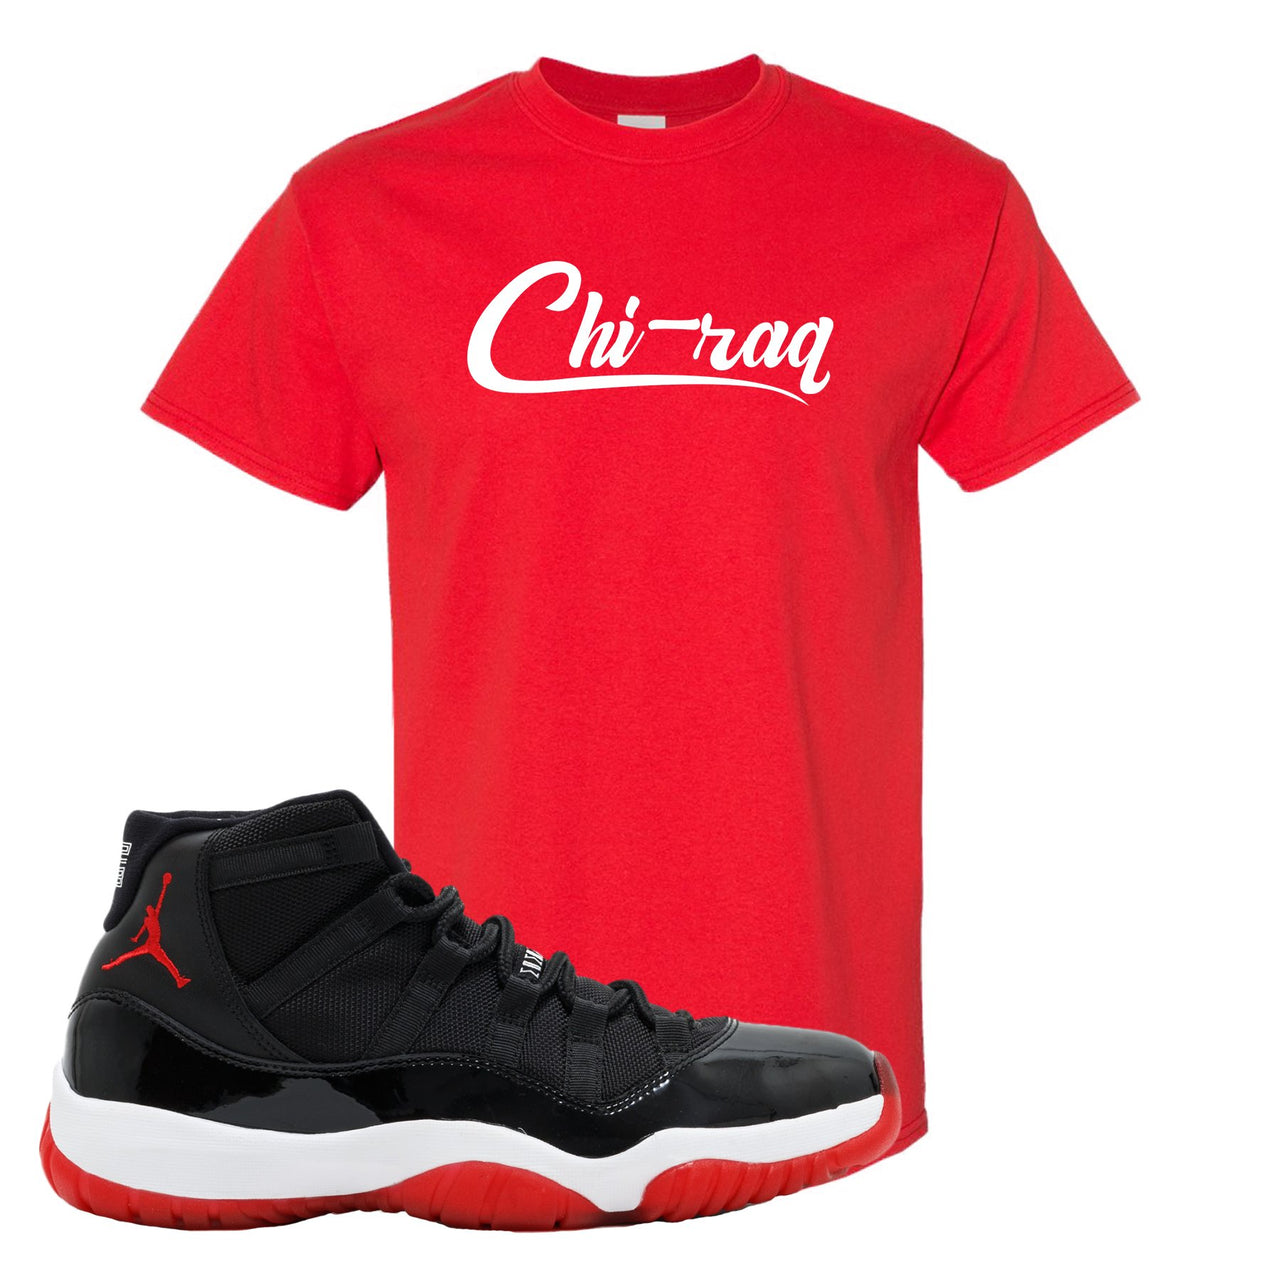 Jordan 11 Bred Chi-raq Red Sneaker Hook Up T-Shirt